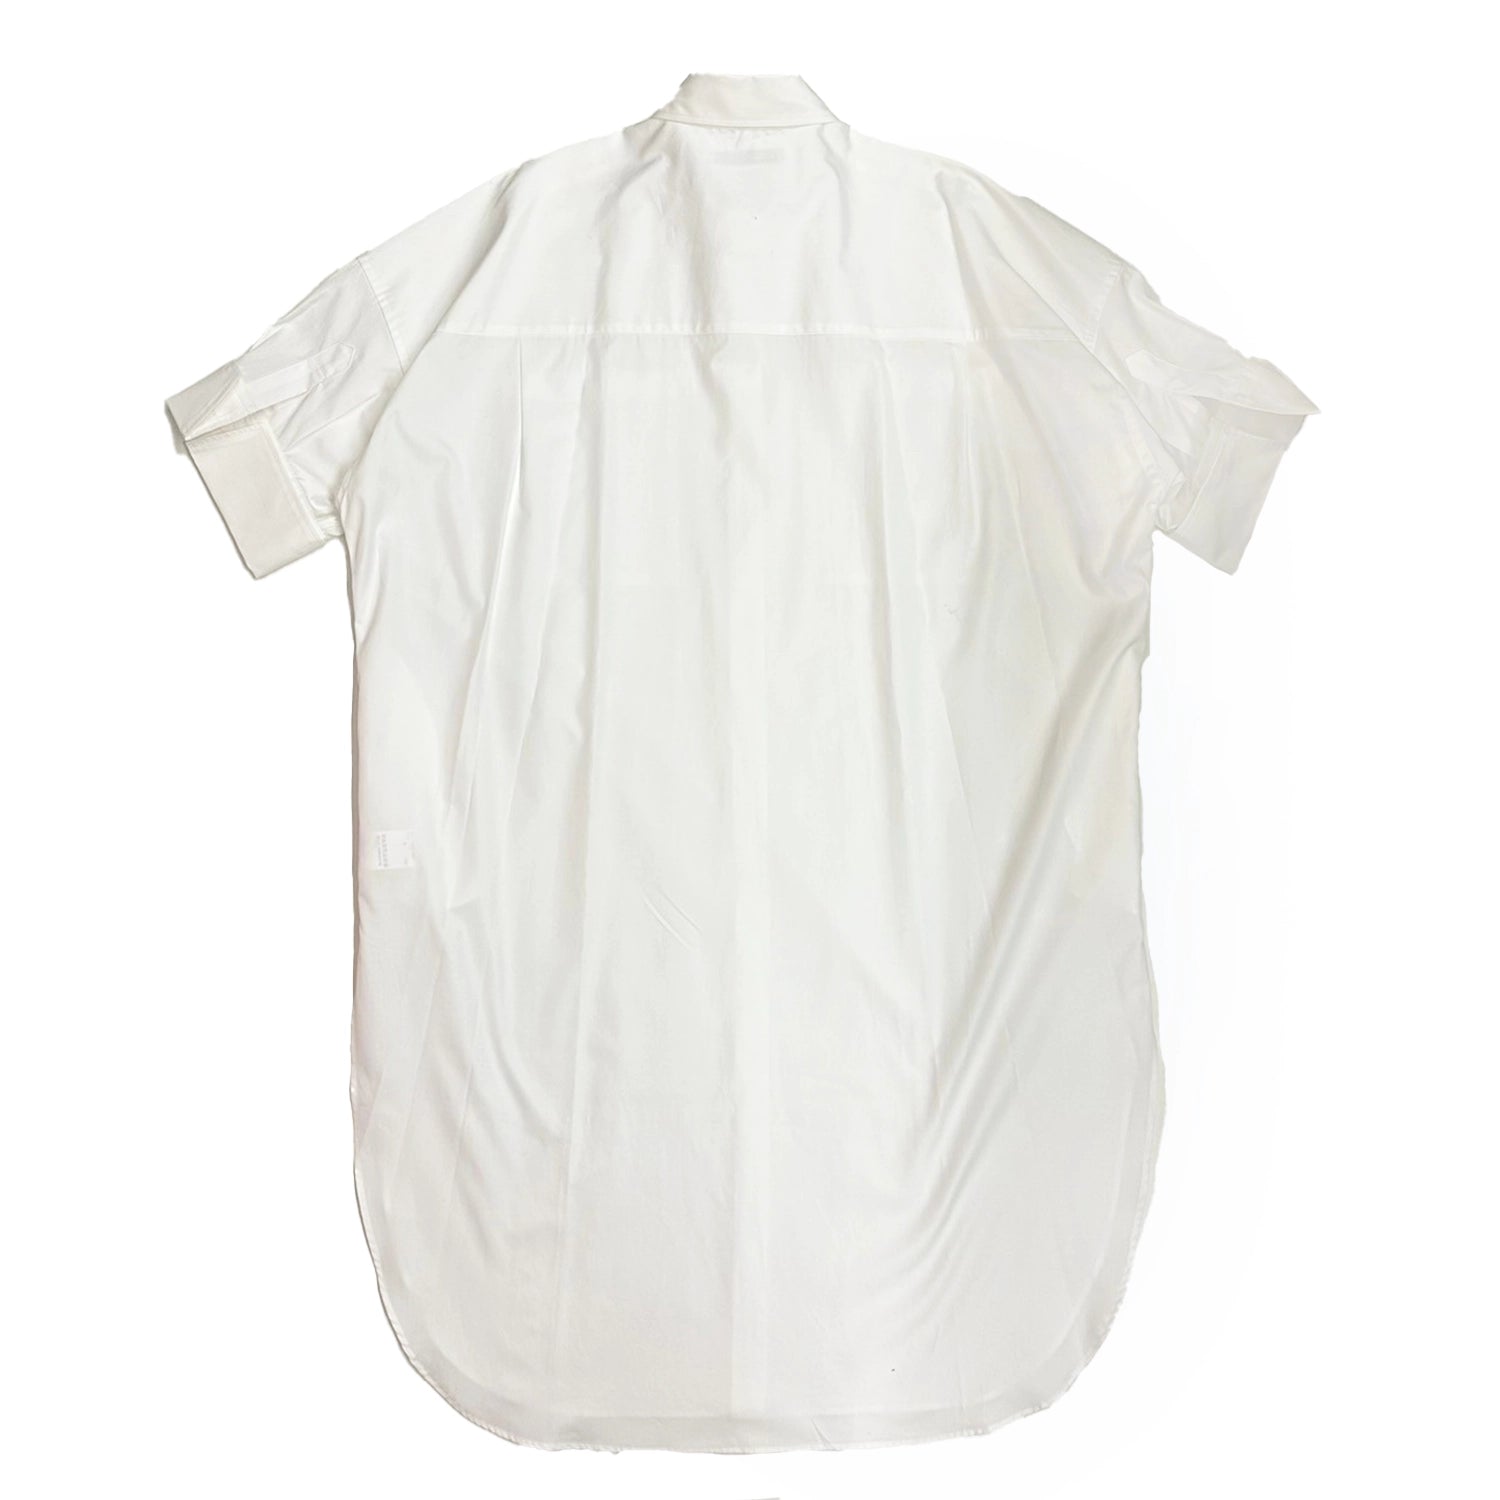 08sircus / Broad over size long shirt dress